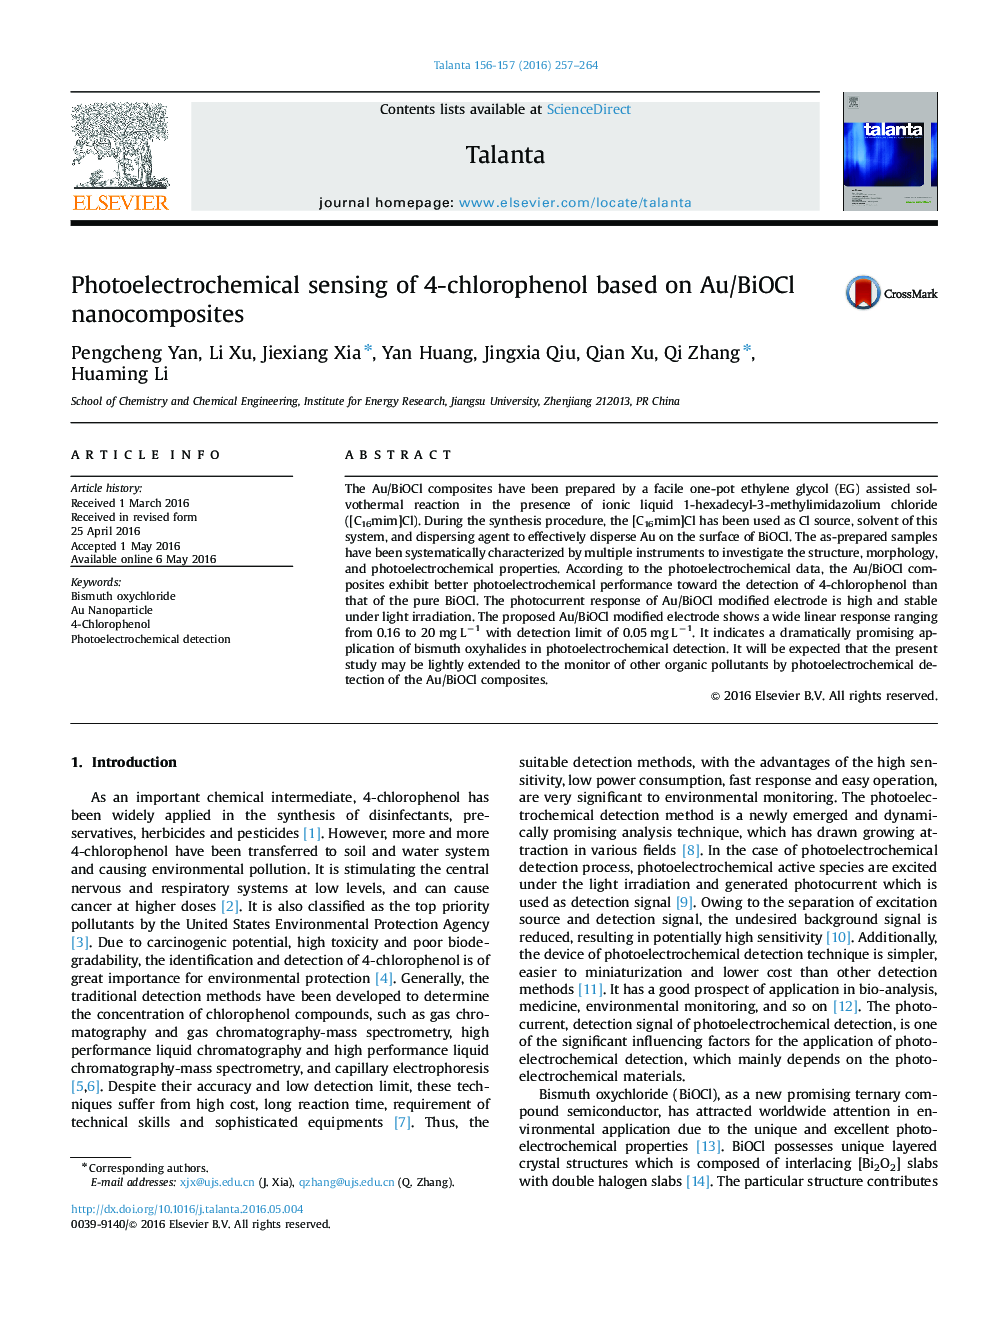 Photoelectrochemical sensing of 4-chlorophenol based on Au/BiOCl nanocomposites